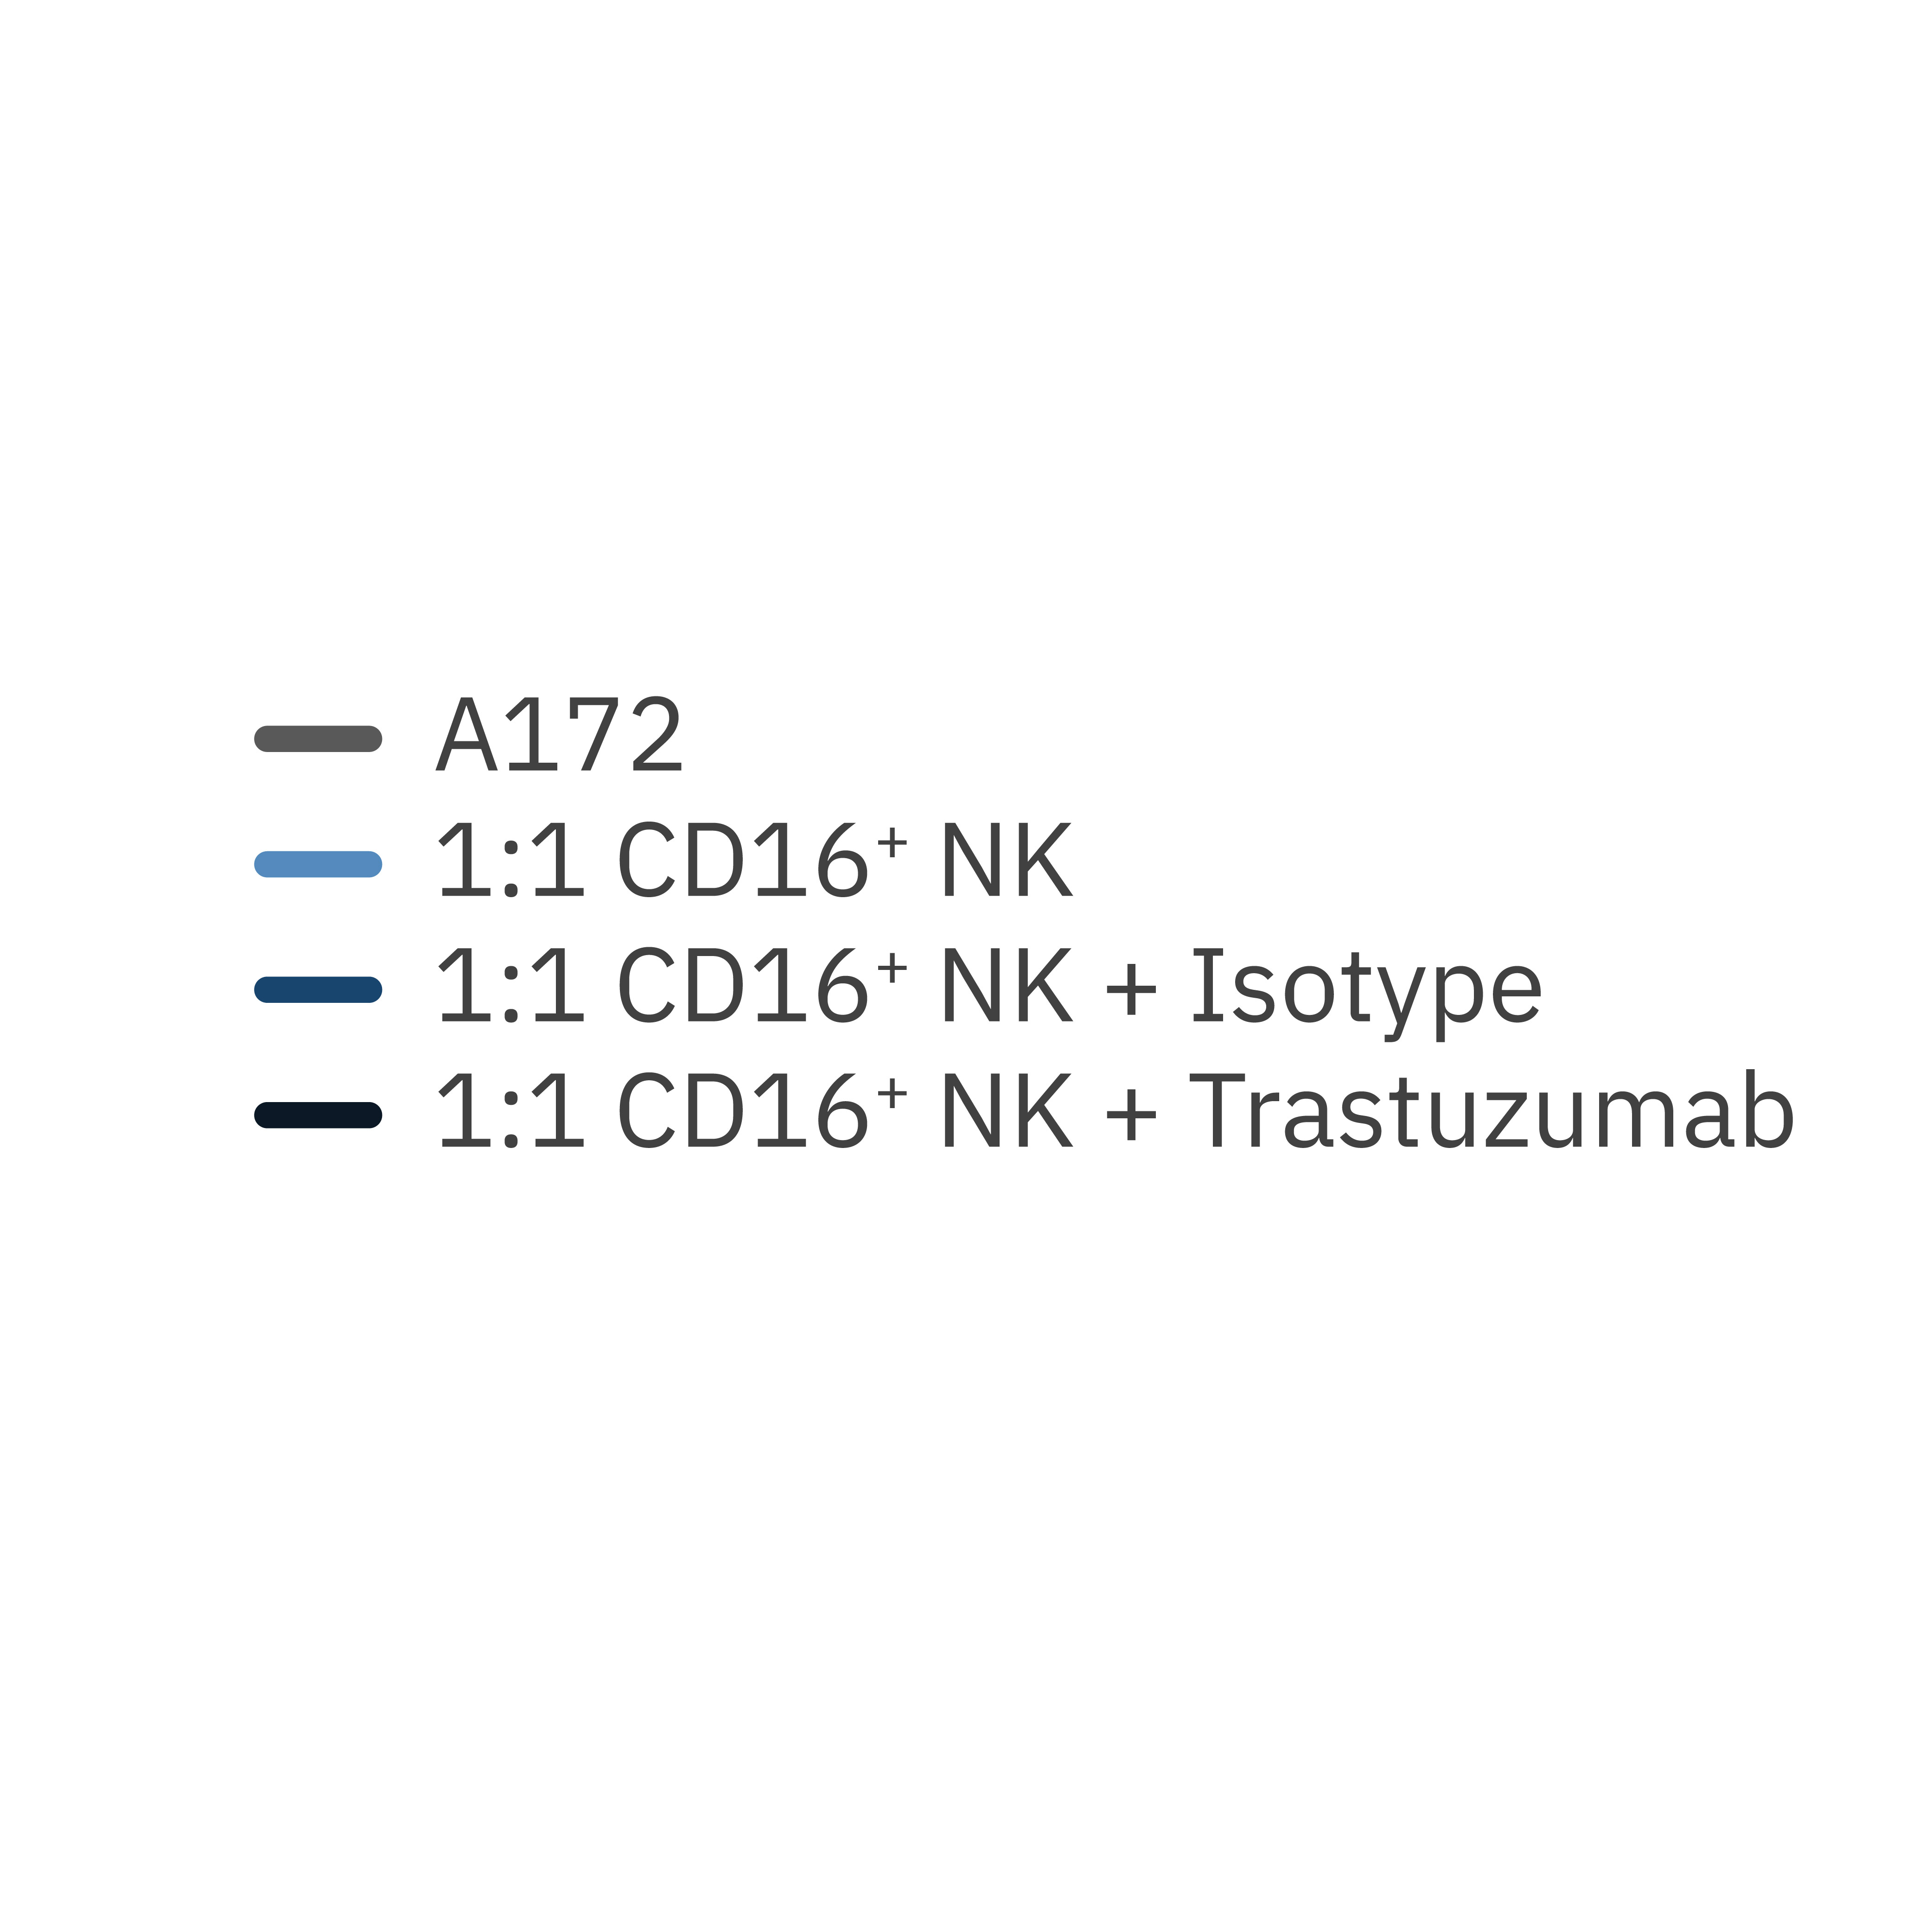 Trastuzumab promotes antibody-dependent NK cell killing of A172 target cells. 